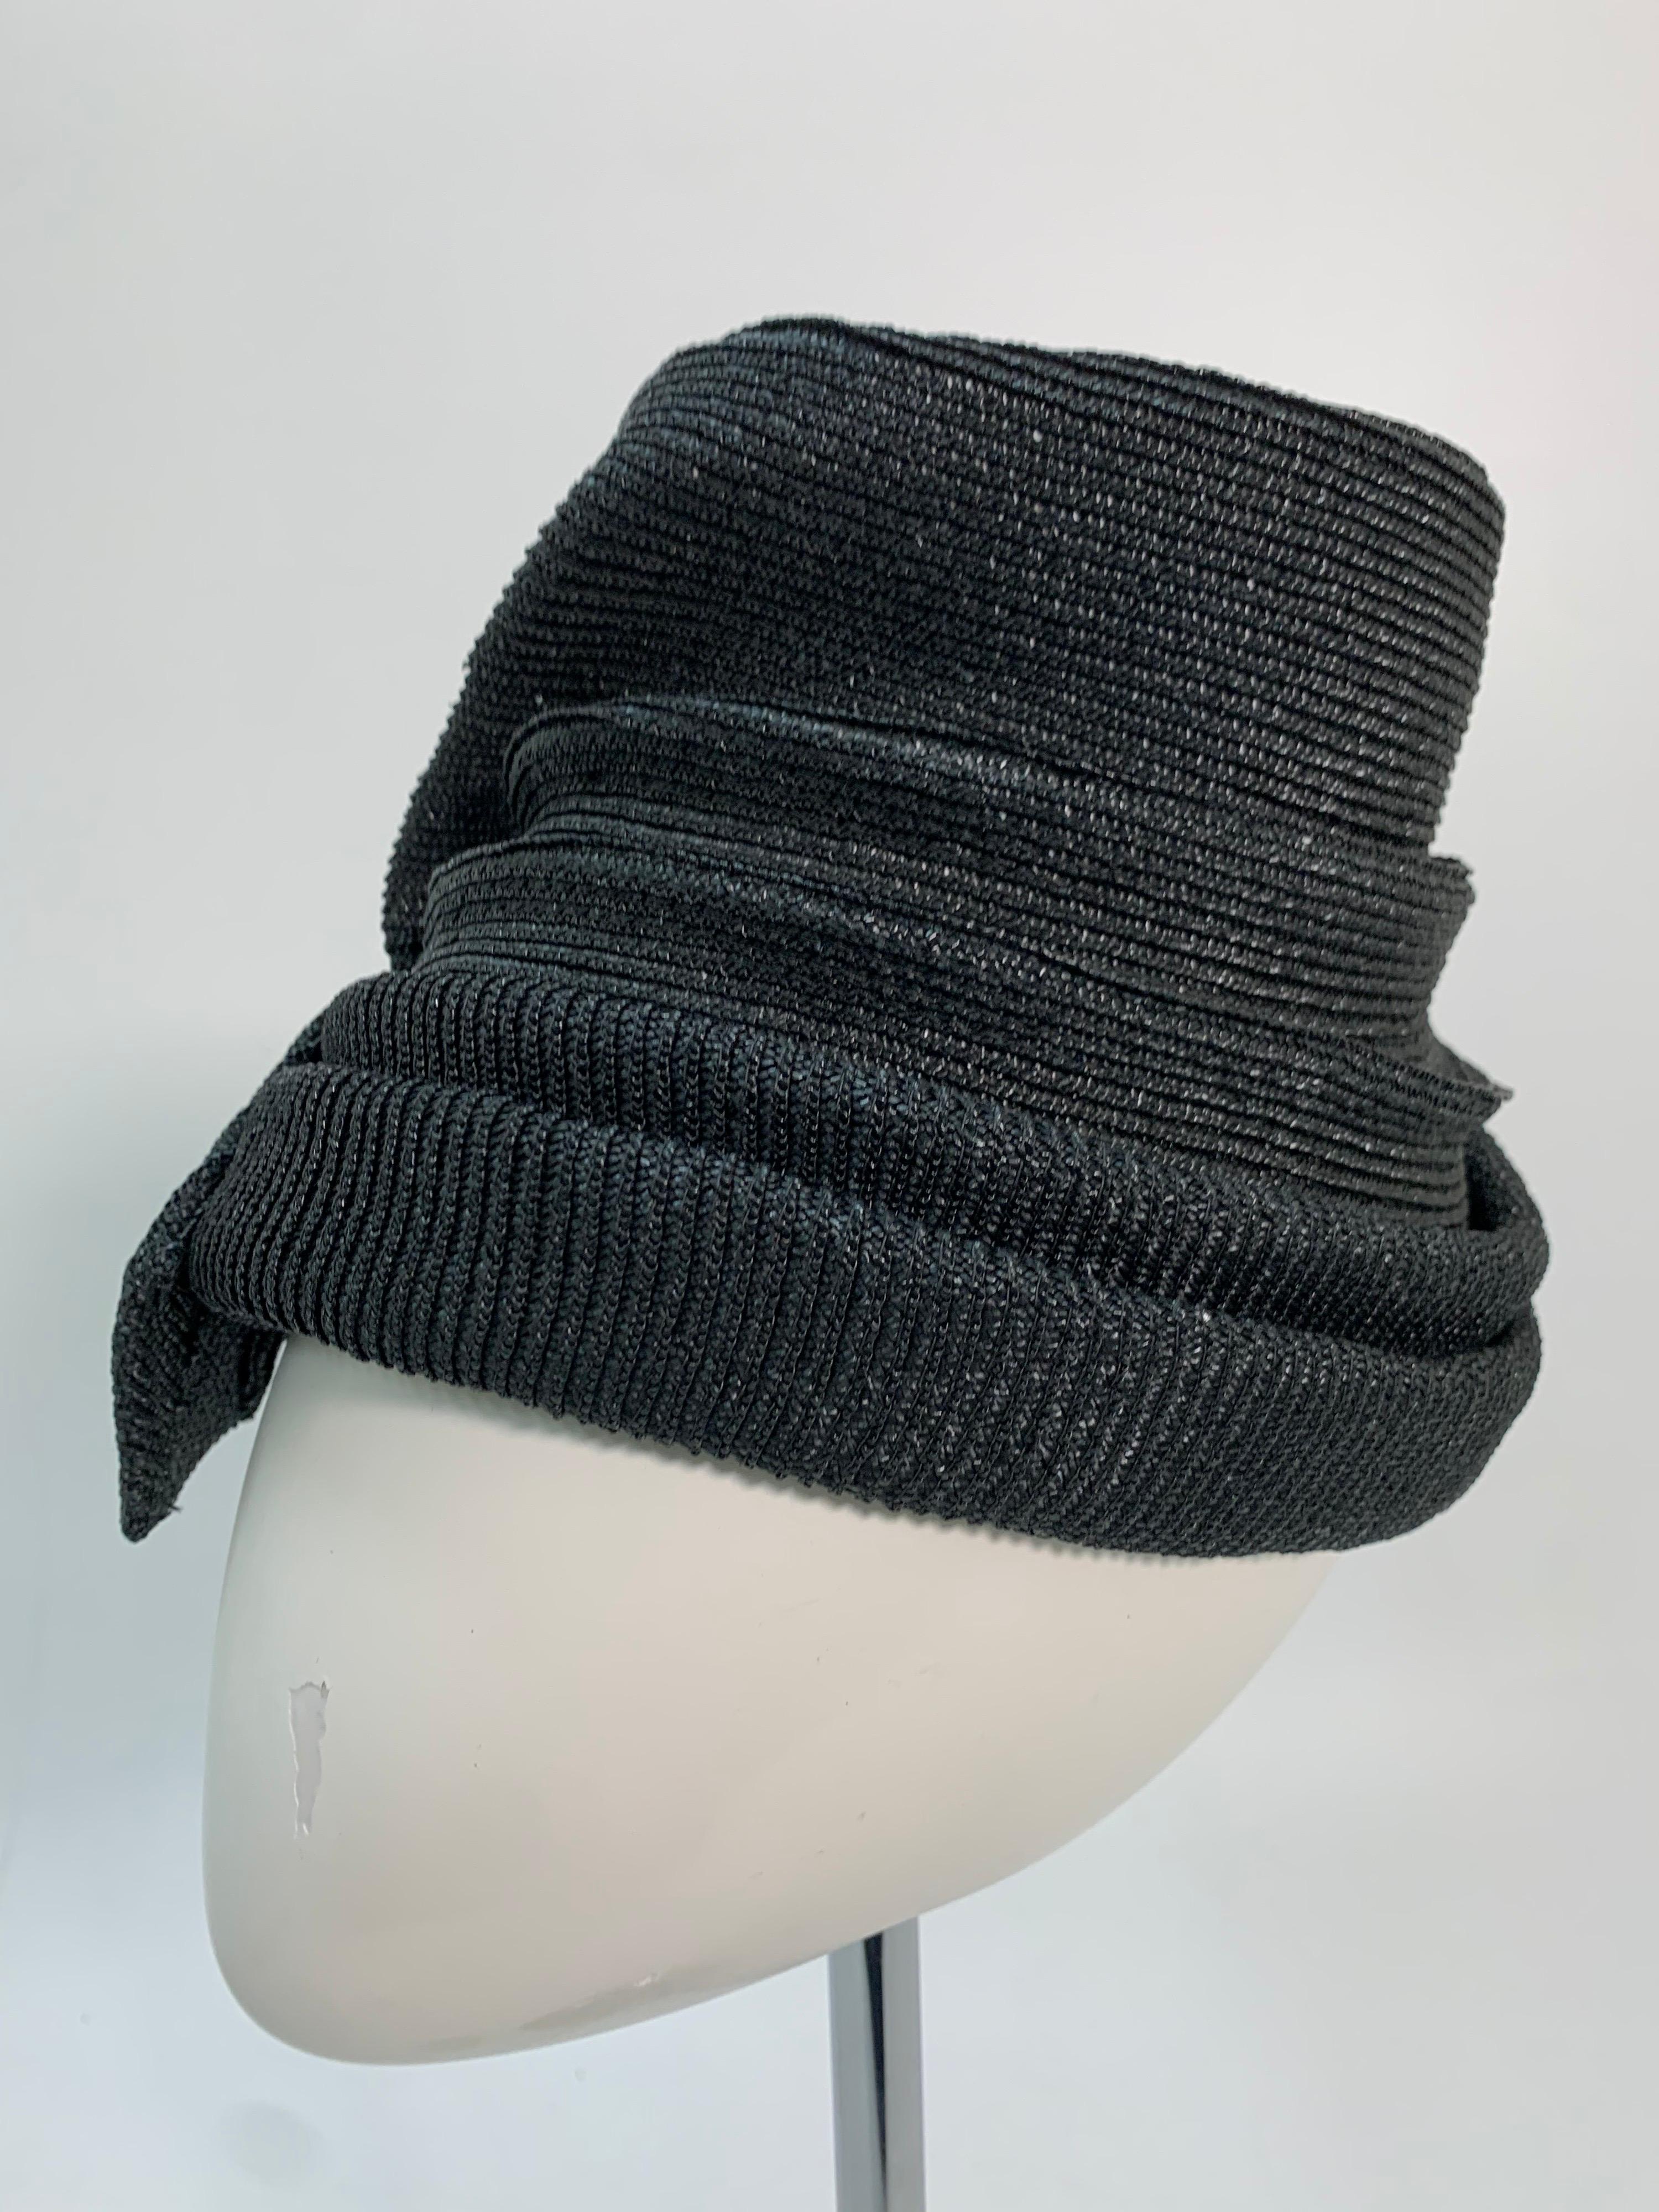 1950 John Frederics Black Straw Avant Guarde Sculpted Hat  For Sale 3